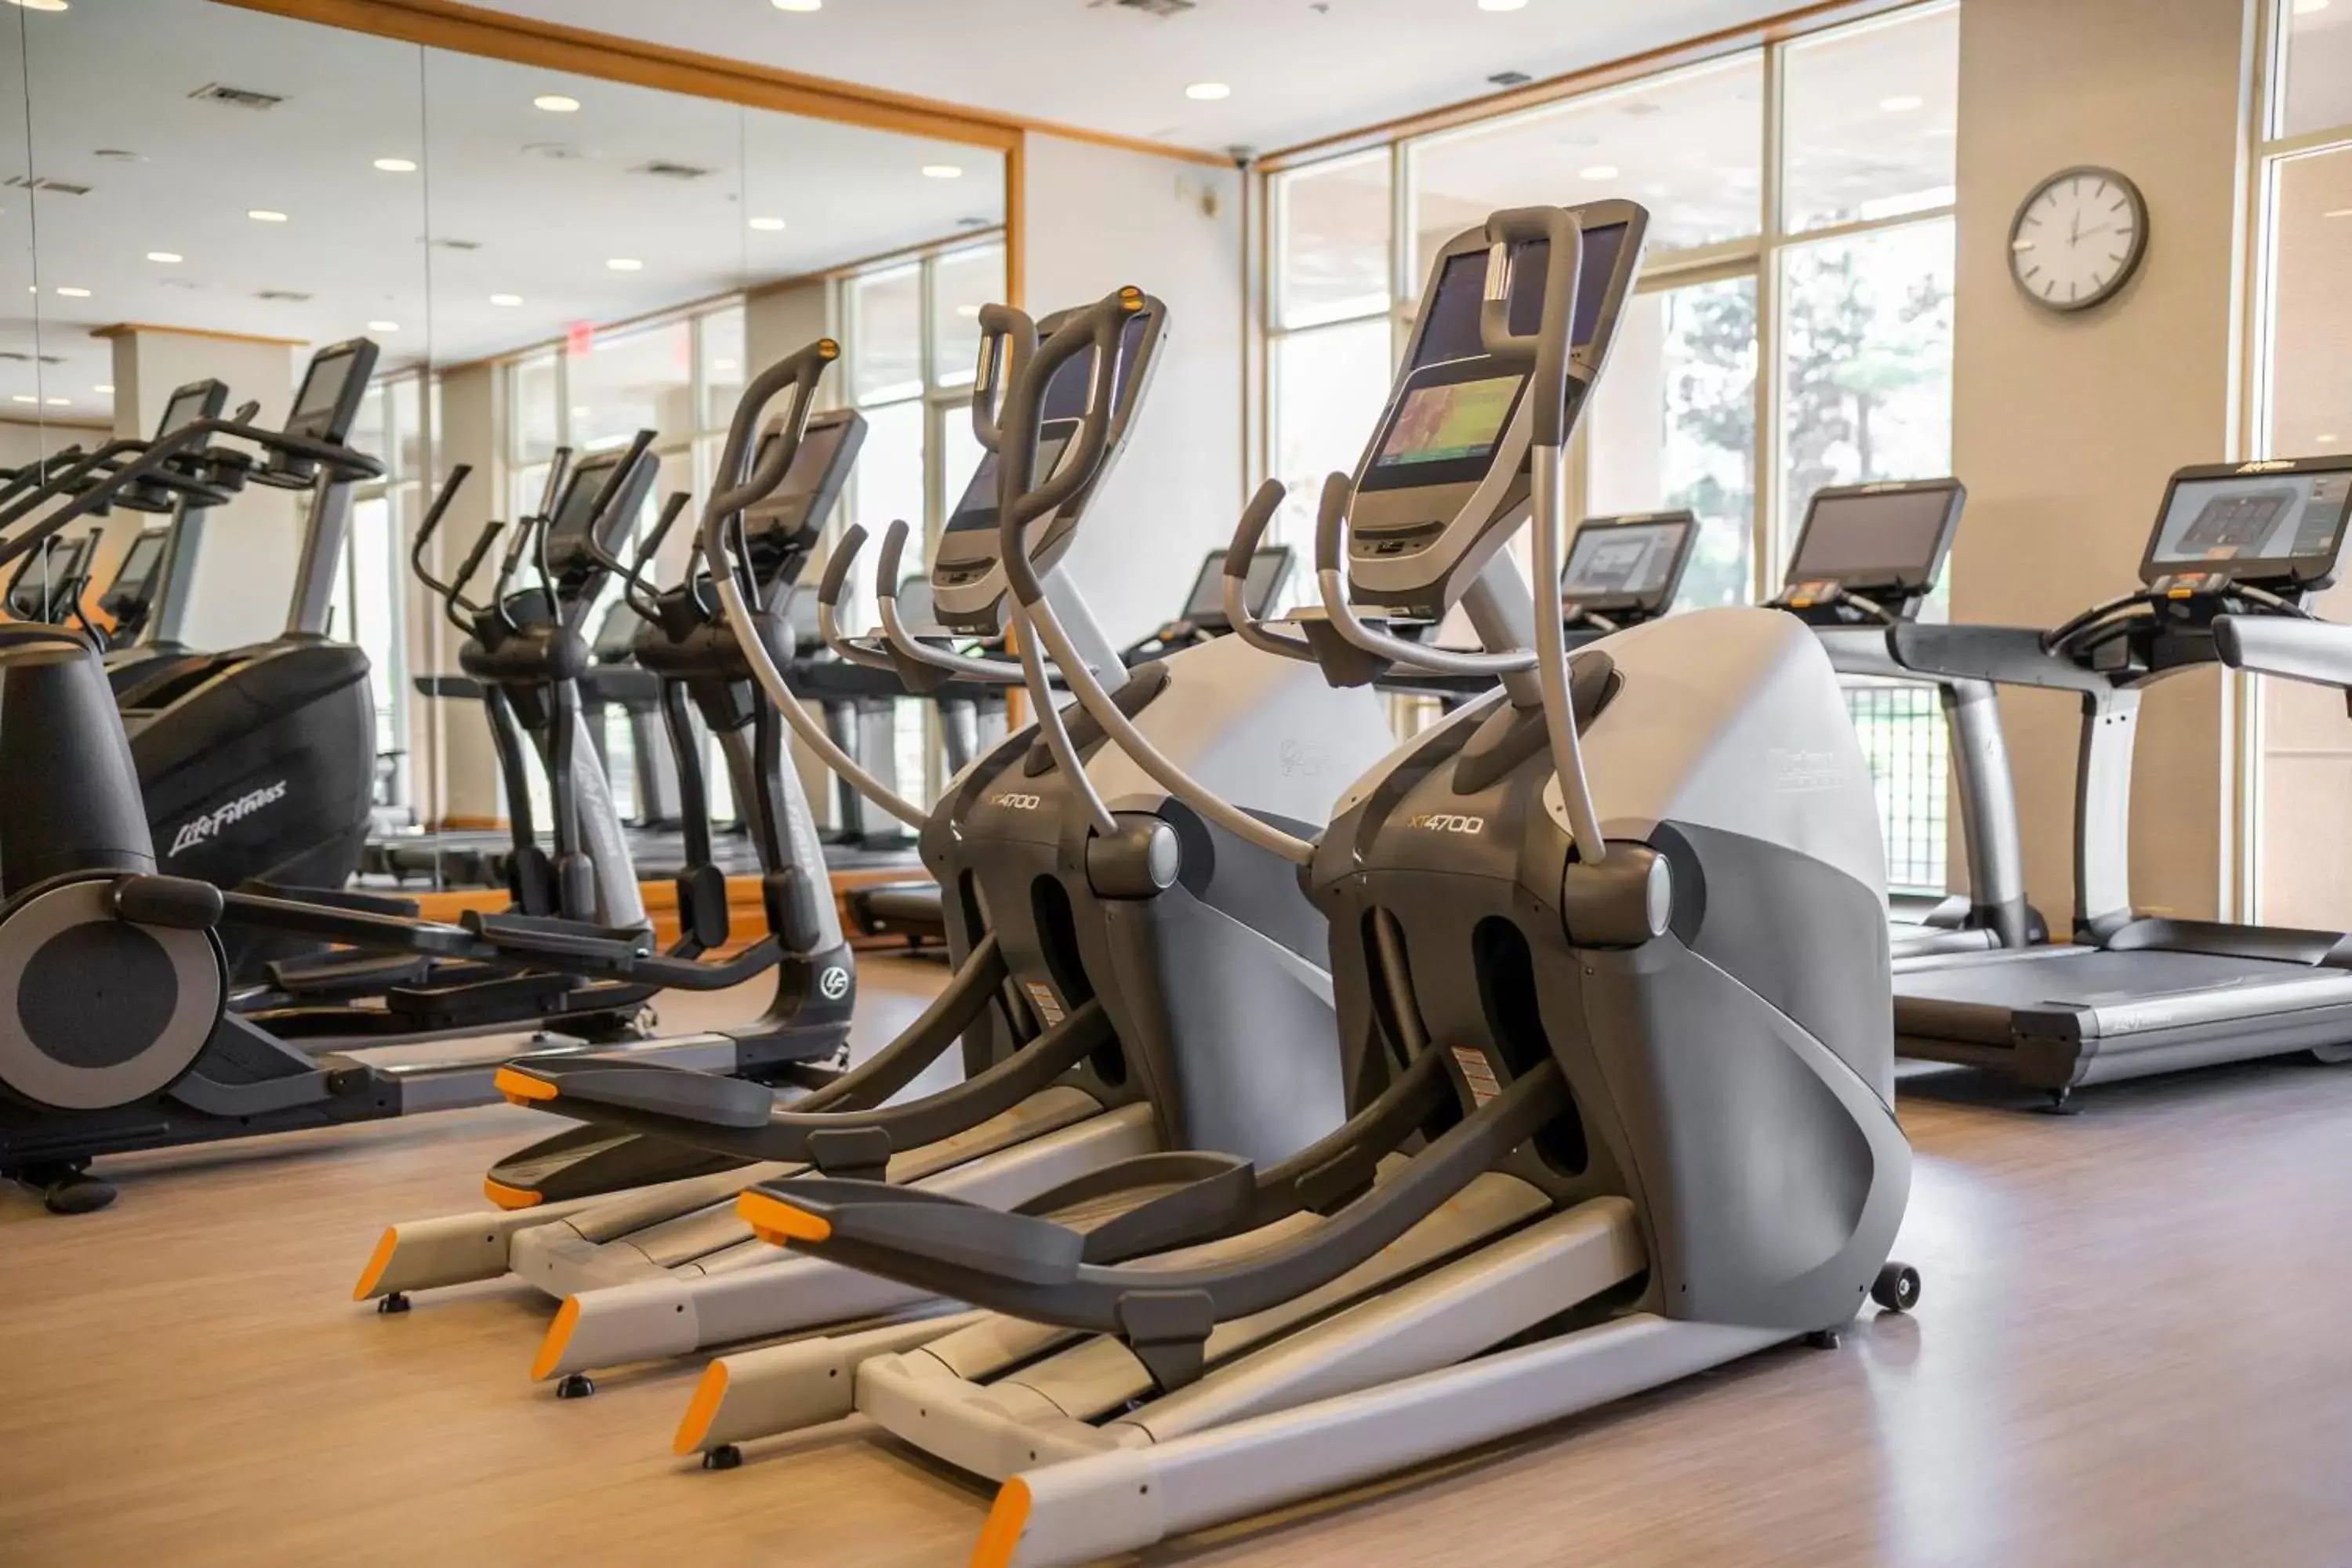 Fitness centre/facilities, Fitness Center/Facilities in Renaissance Esmeralda Resort & Spa, Indian Wells